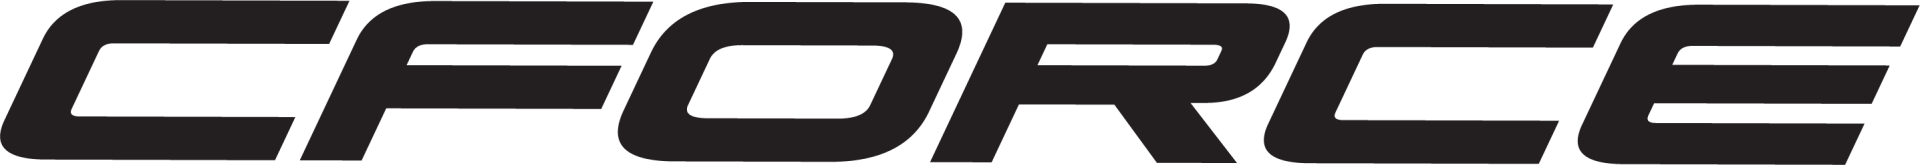 CFORCE 110 Logo